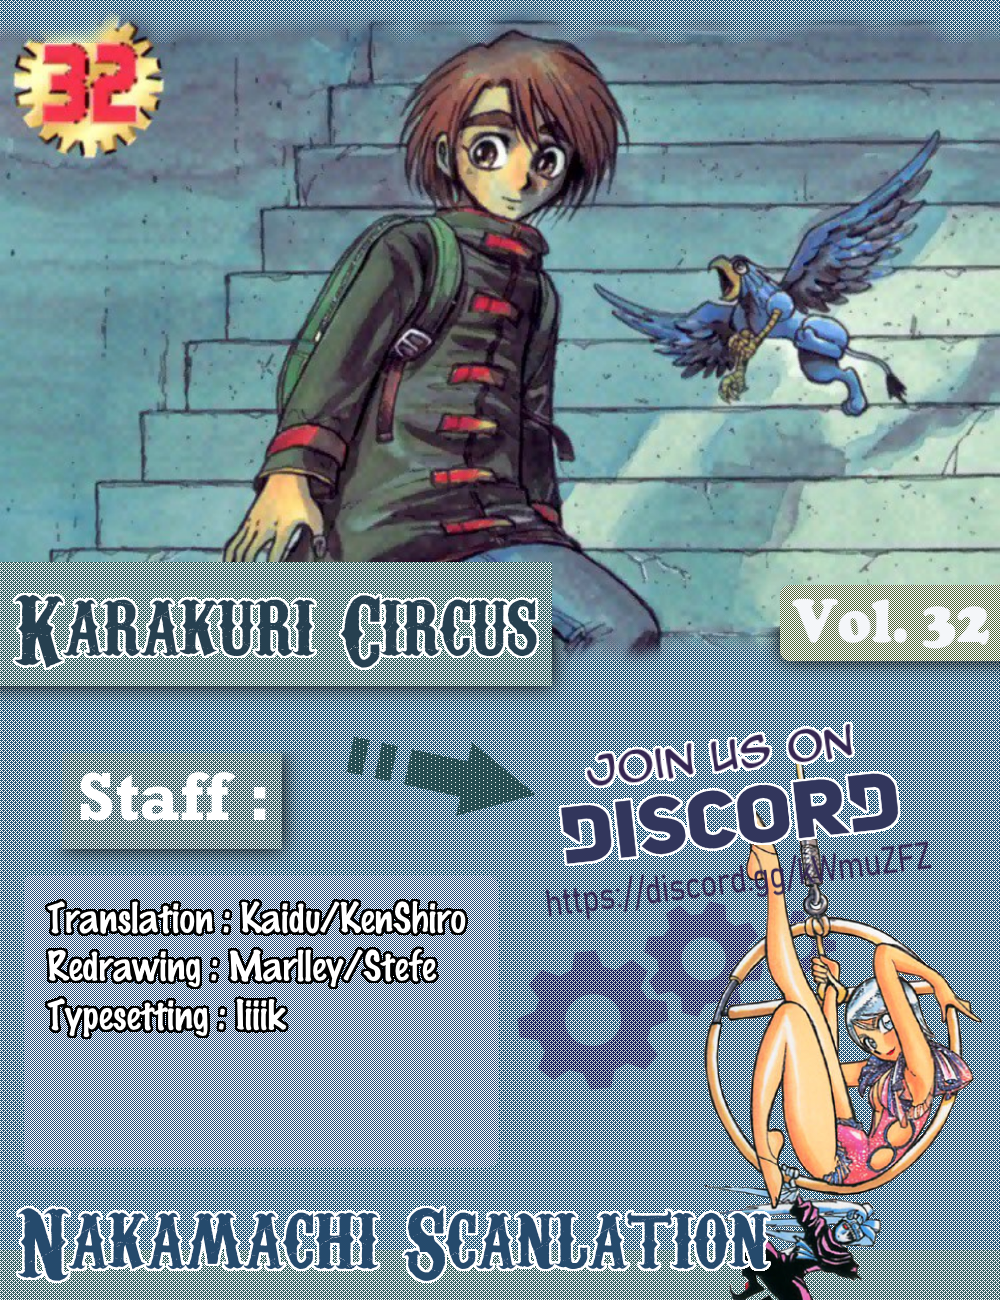 Karakuri Circus Chapter 307: Main Part - Days With Narumi - Act 7: Narumi's Void Iii - Picture 1